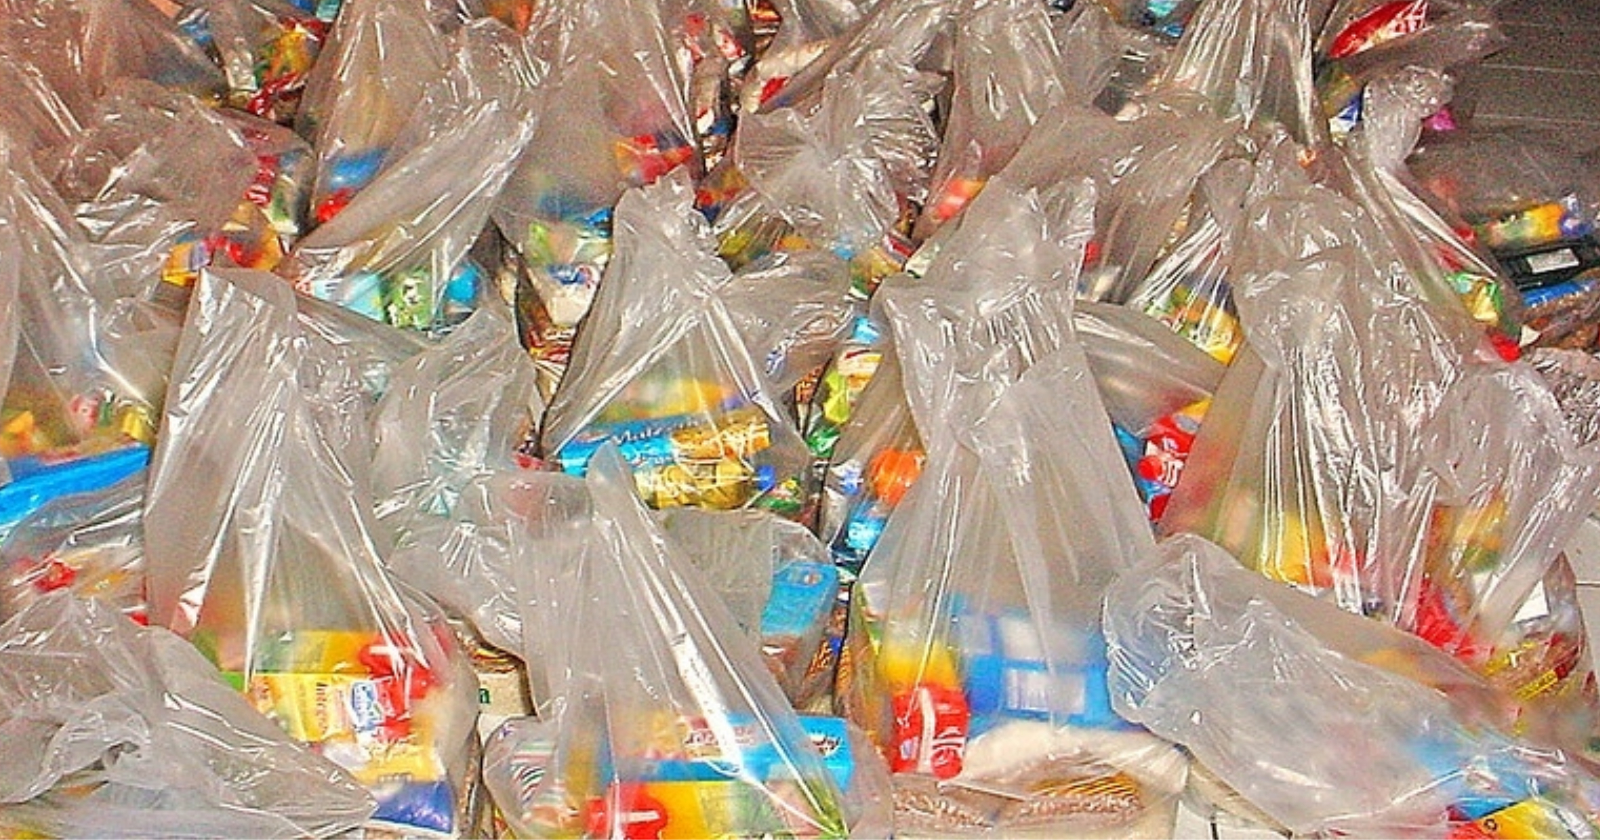 pbh vai distribuir kits de higiene e cestas básicas